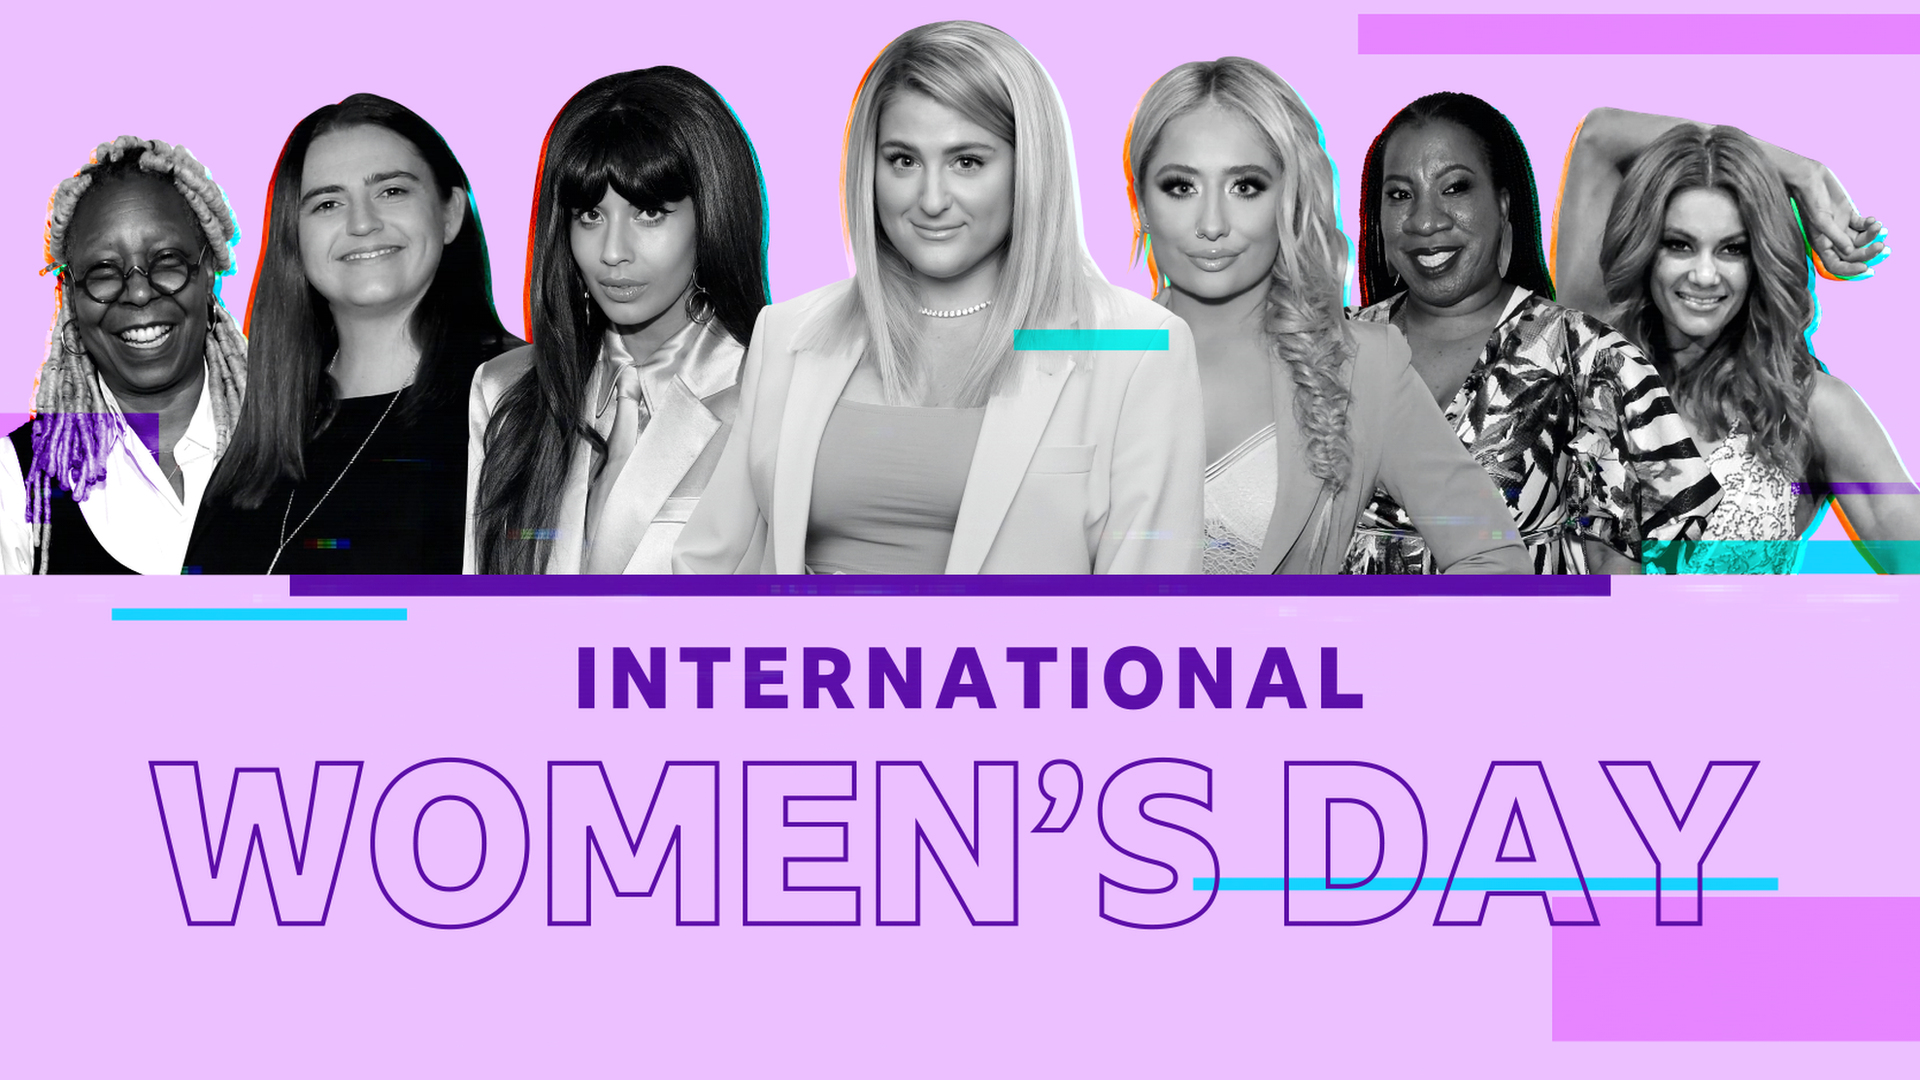 International Women's Day: Who inspires celebrities like Meghan Trainor, Saffron Barker and Jameela Jamil?